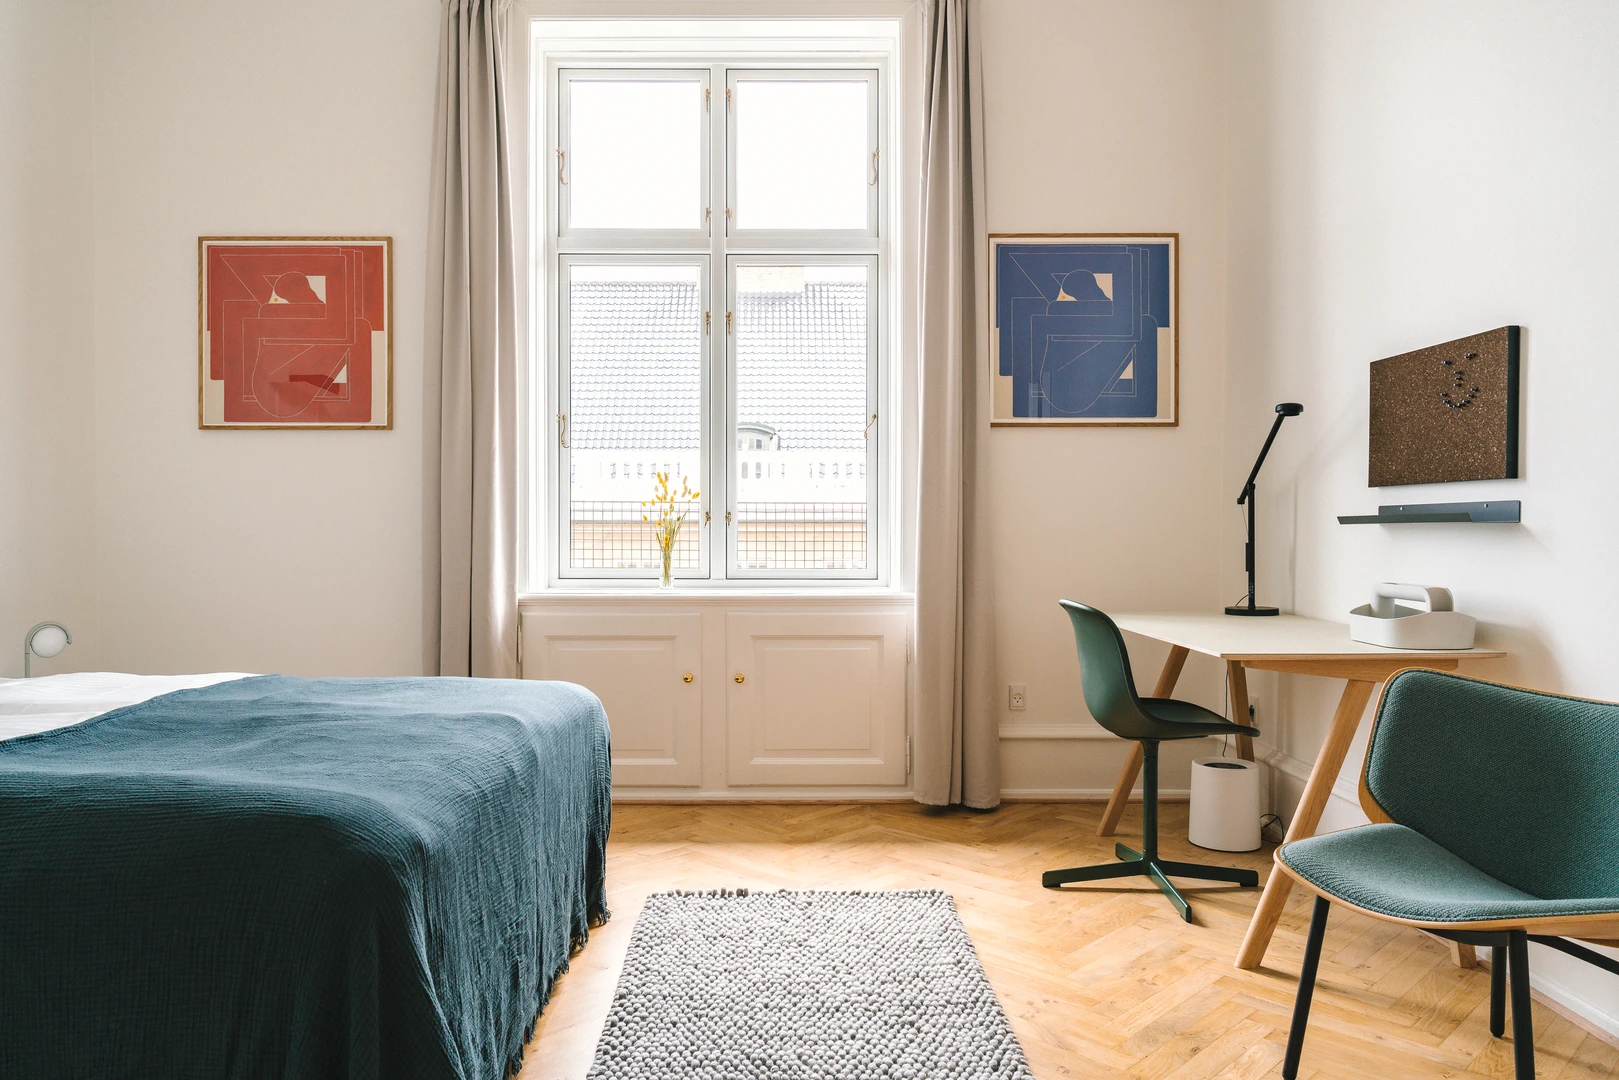 København de ucuz özel oda